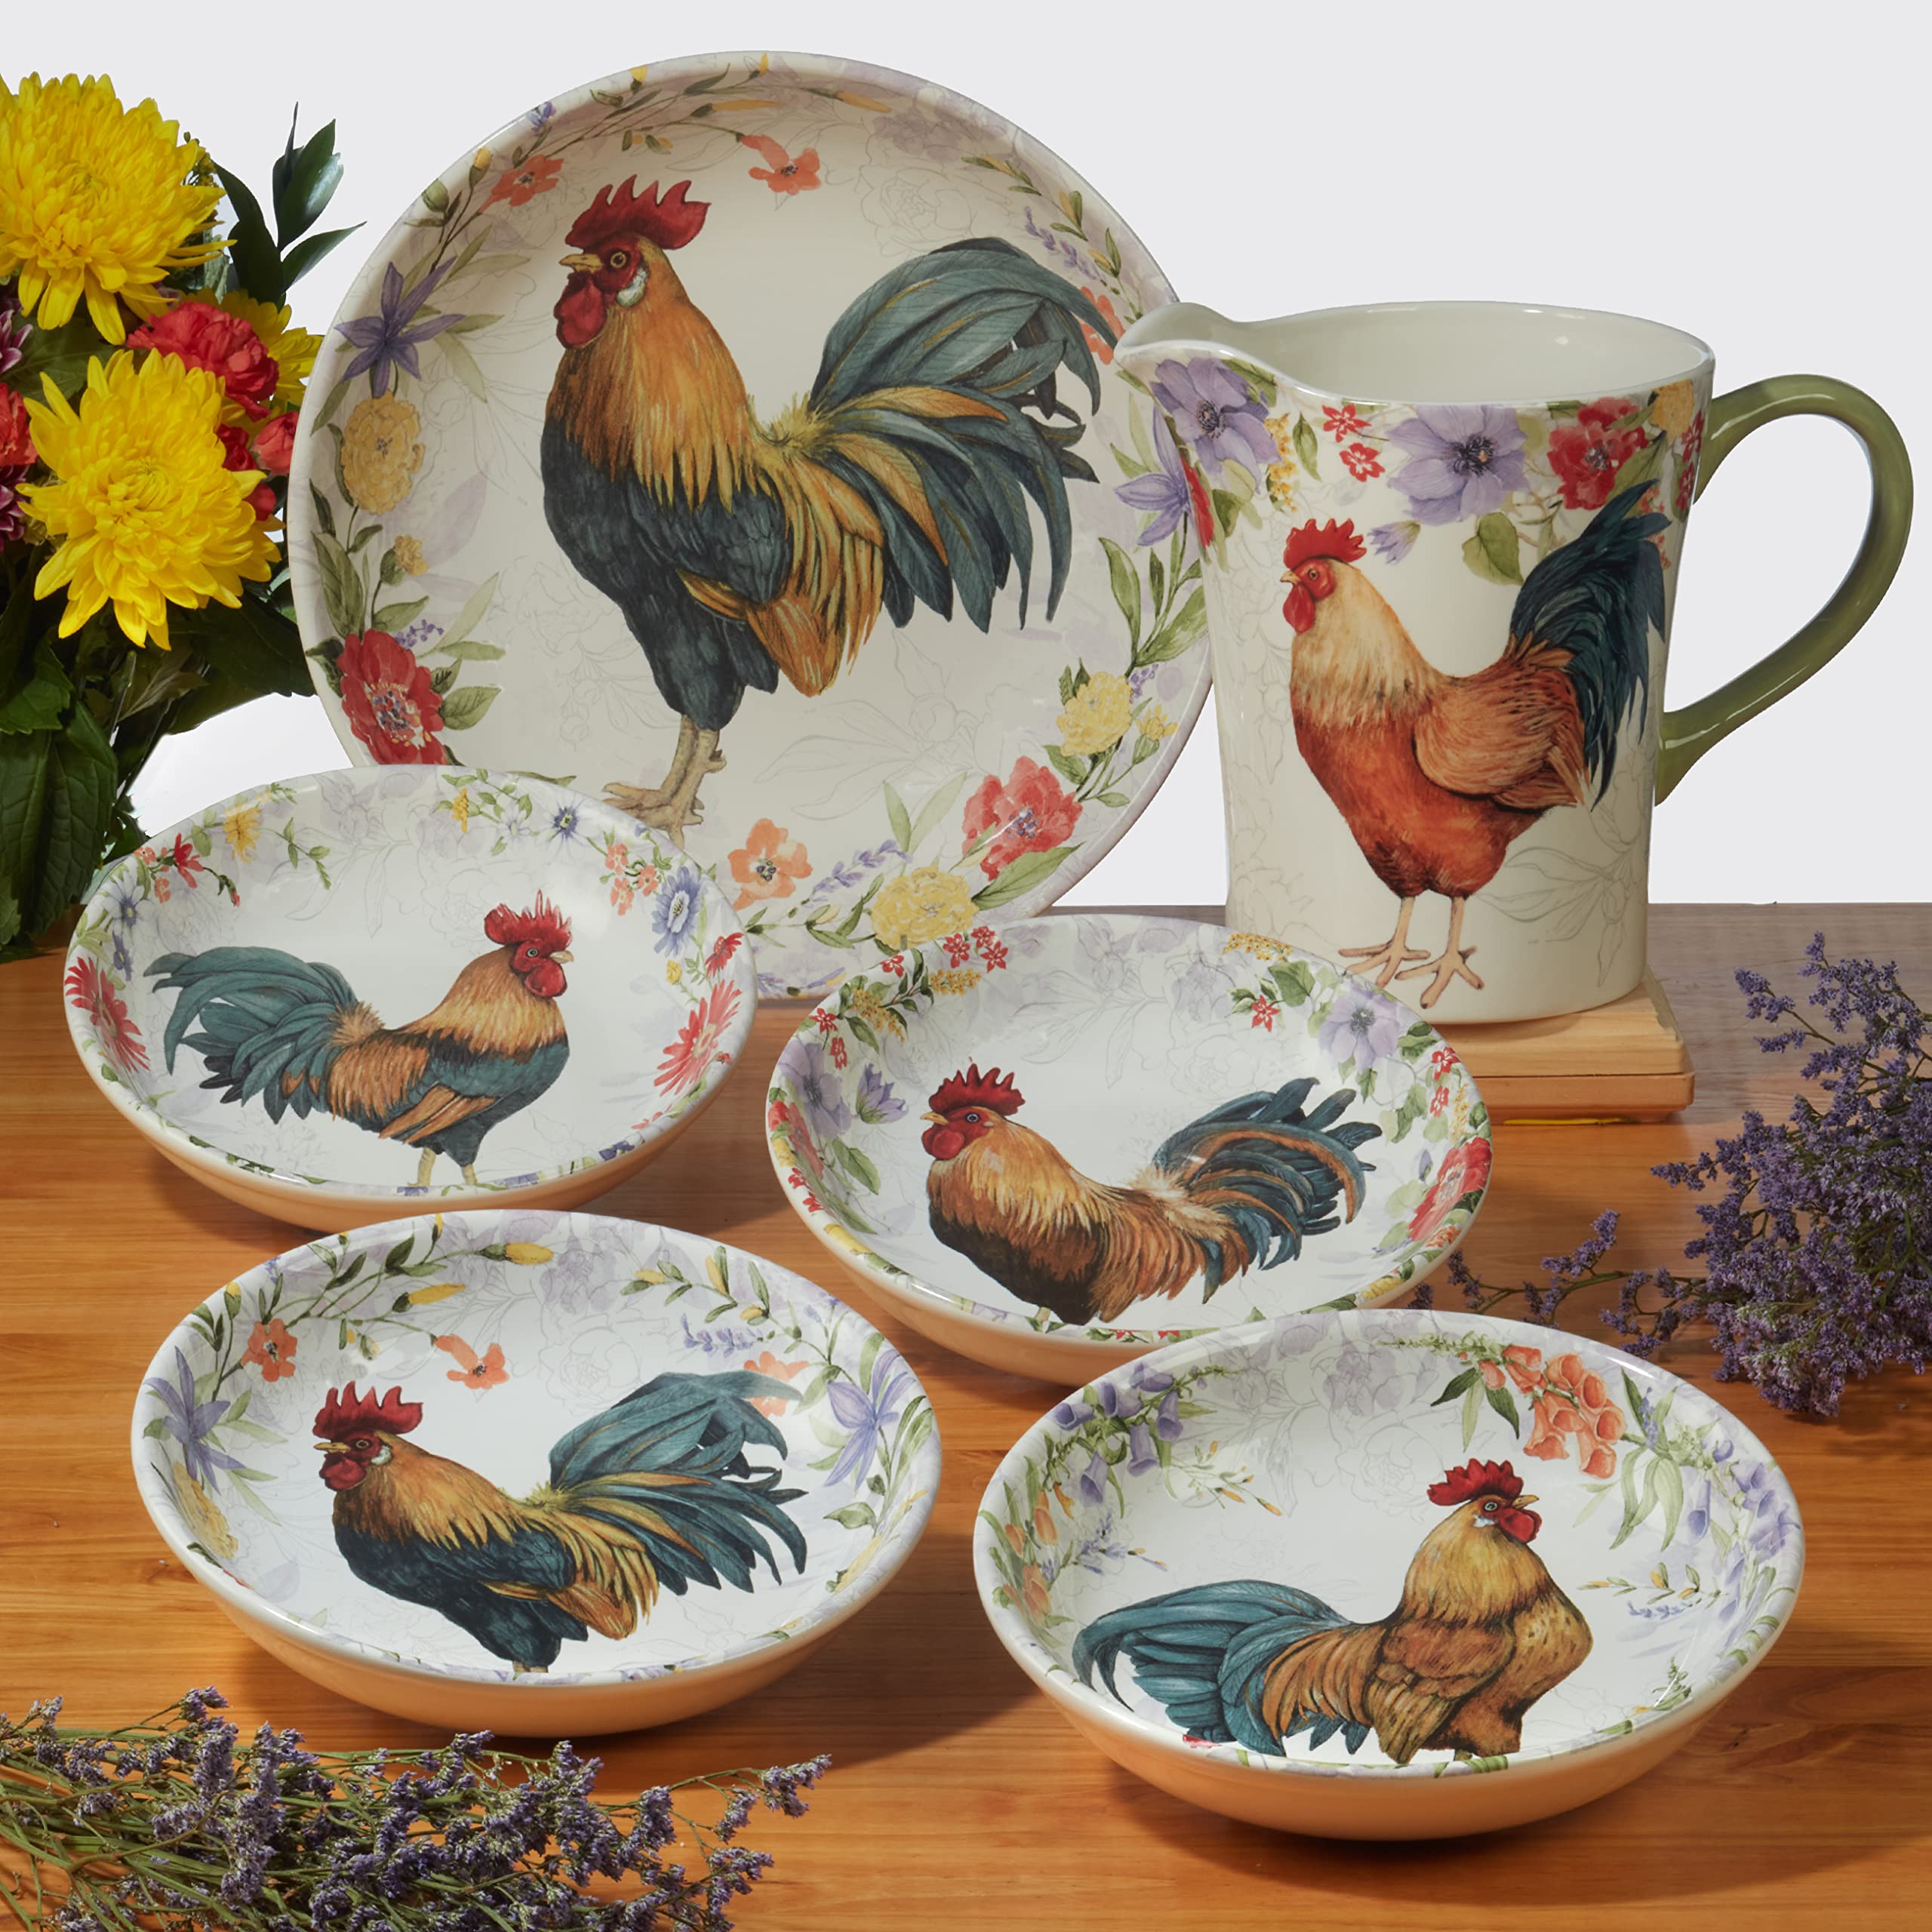 Certified International Floral Rooster 38 oz. Soup/Pasta Bowls, Set of 4 Assorted Designs, Multicolor